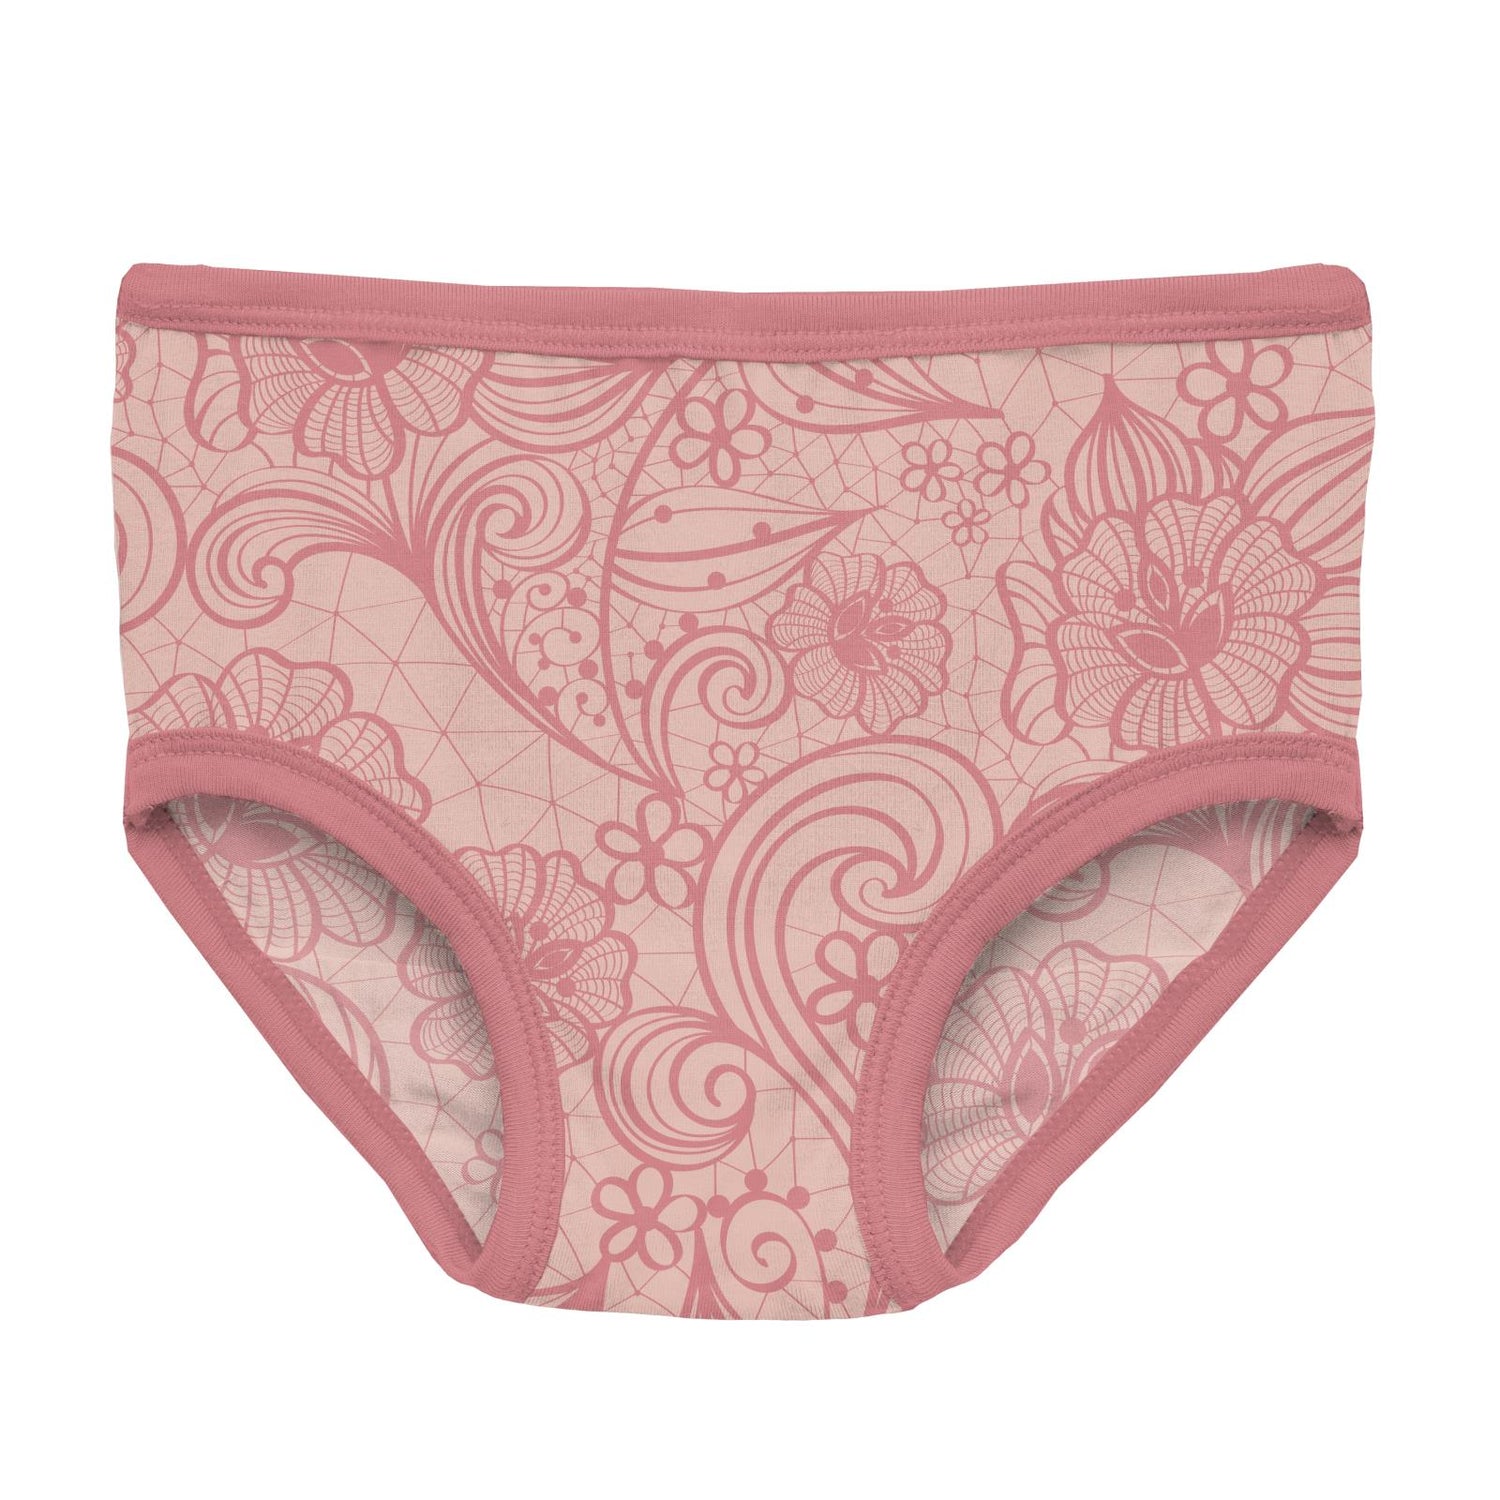 Print Girl's Underwear Set of 2 in Peach Blossom Lace & Desert Rose Ba